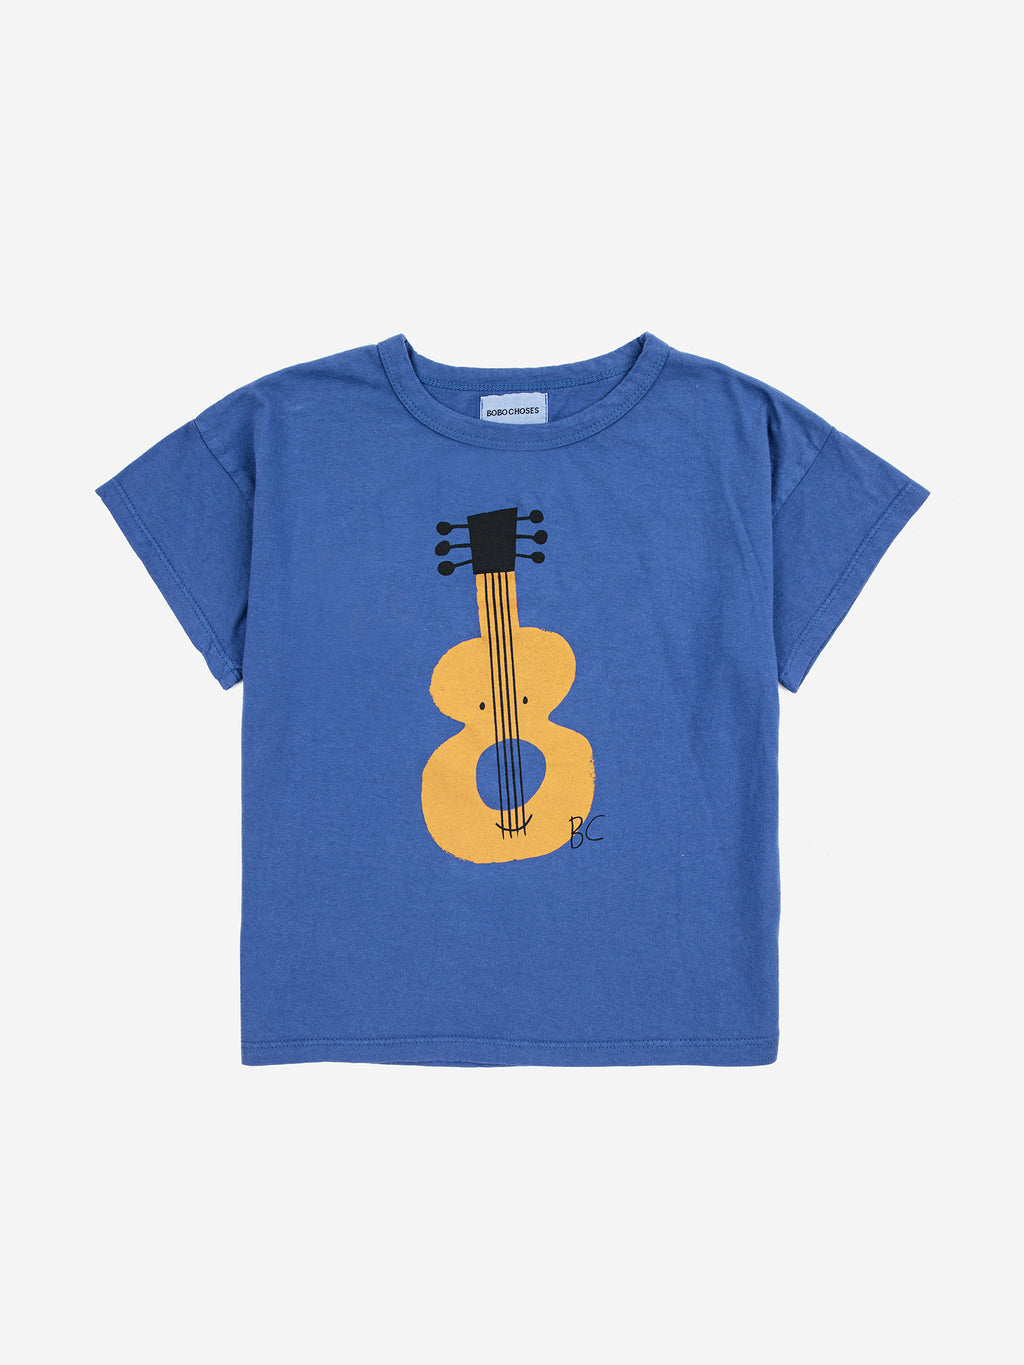 Bobo Choses Acoustic Guitar T-Shirt - Navy Blue